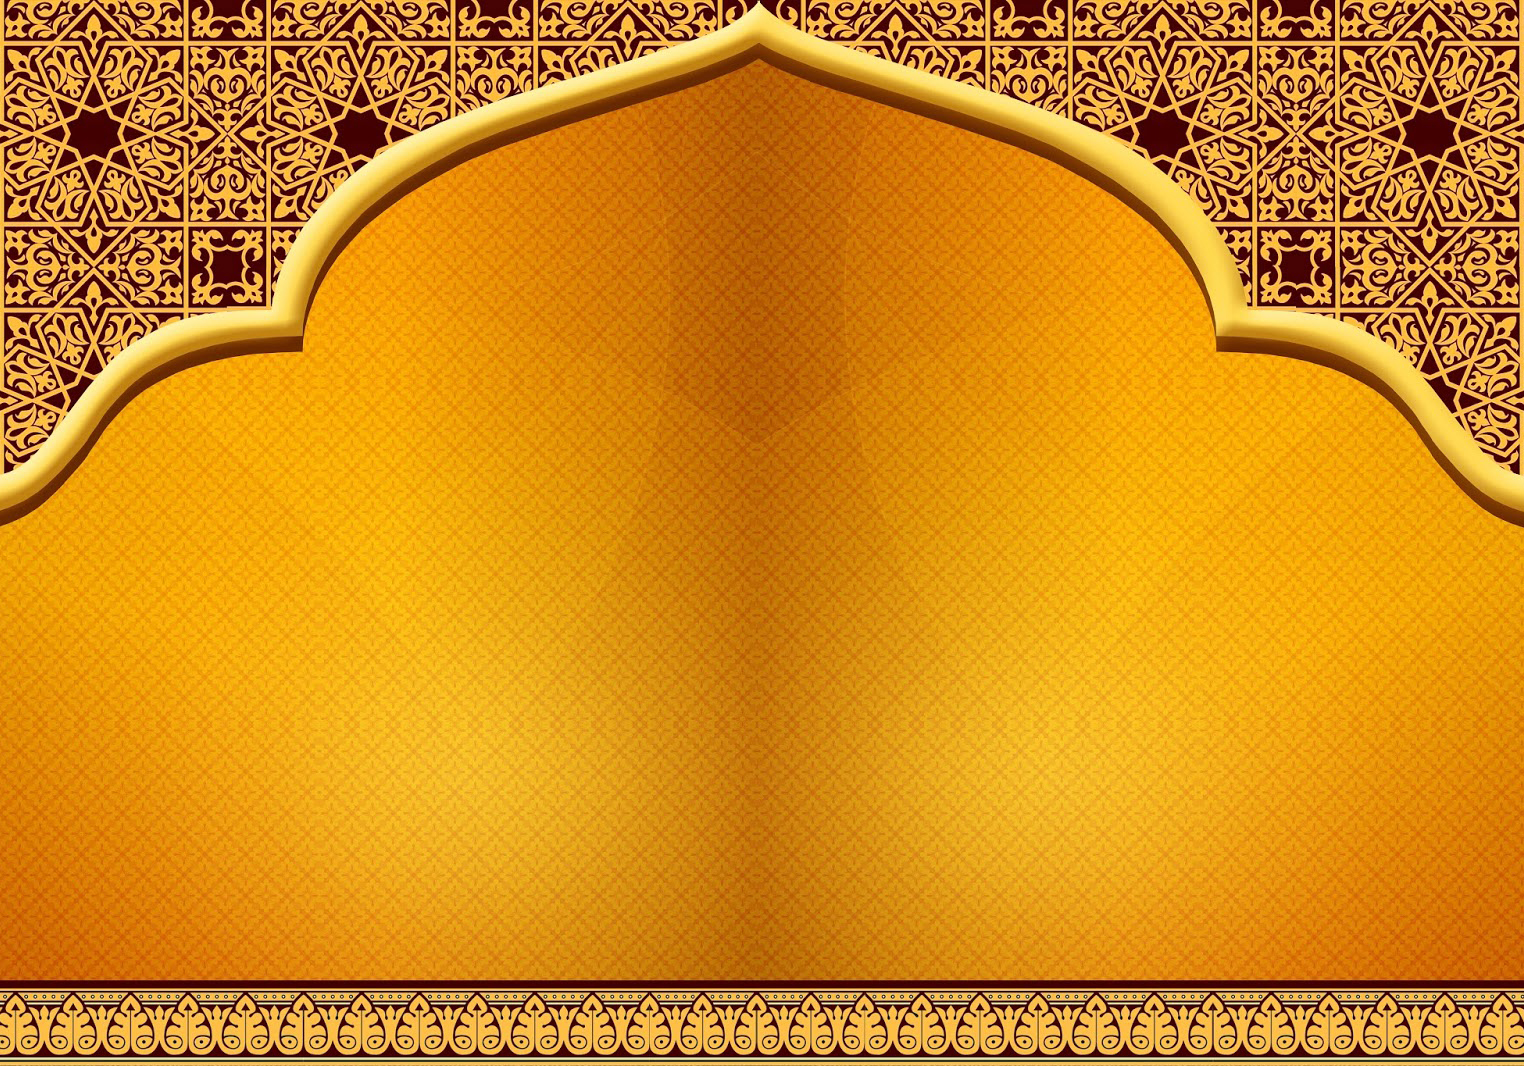 Islamic Background Image For